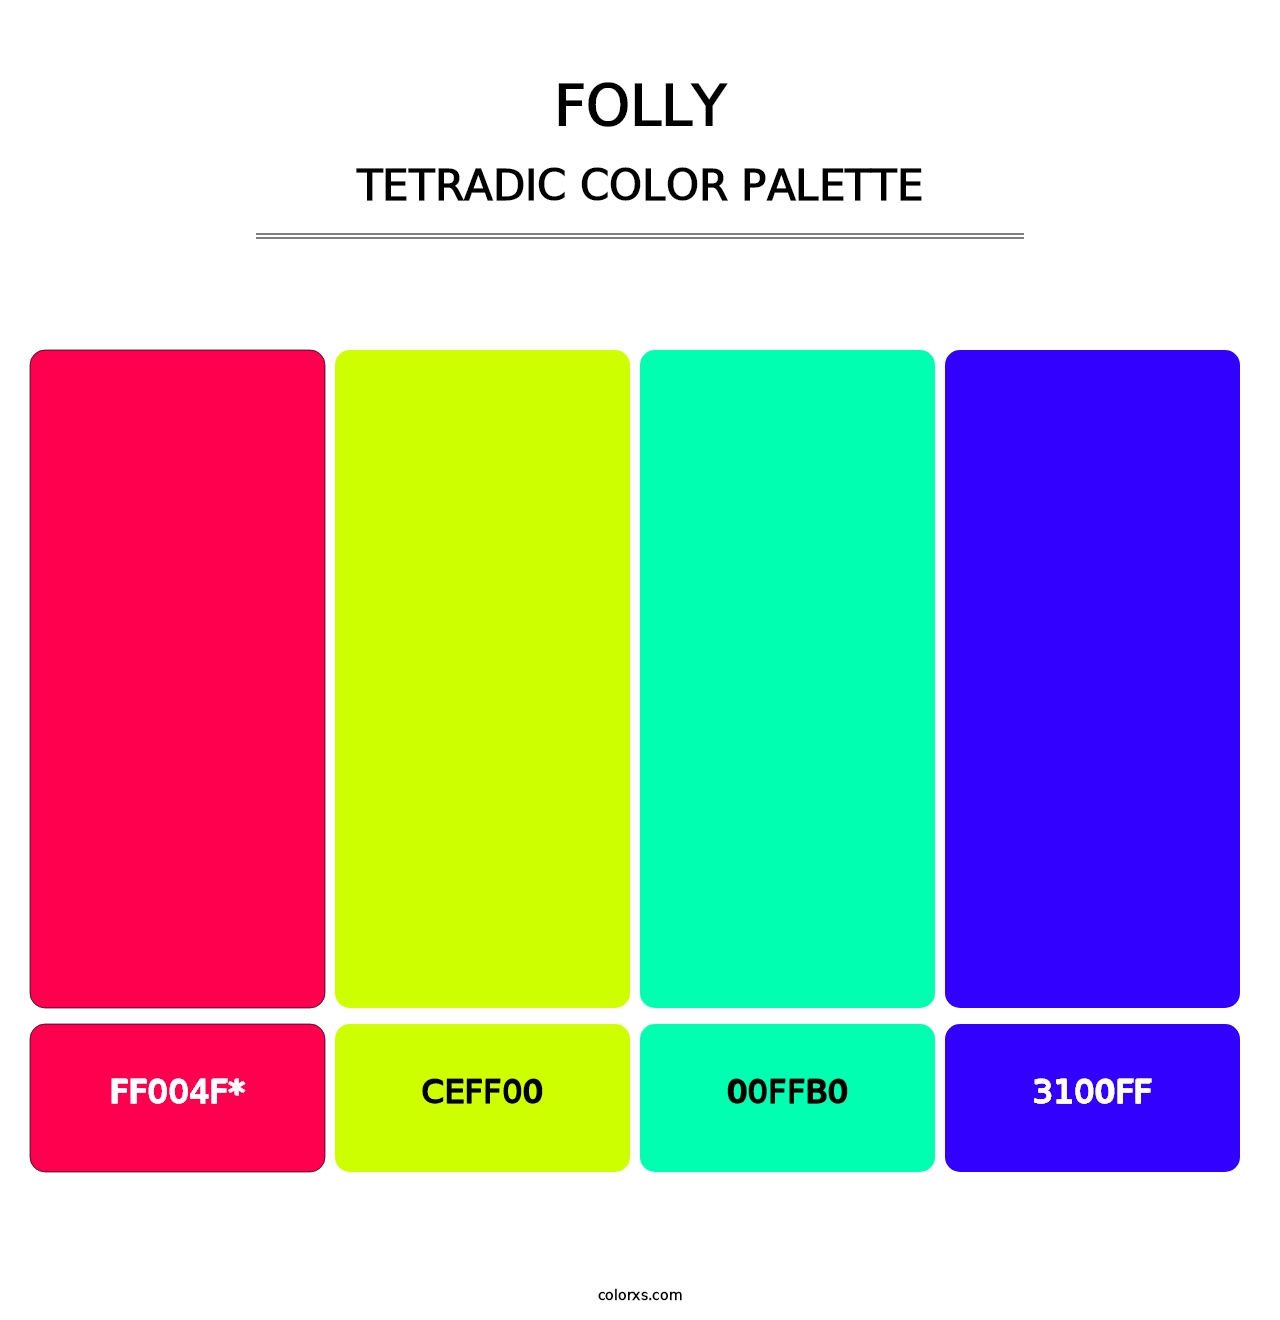 Folly - Tetradic Color Palette